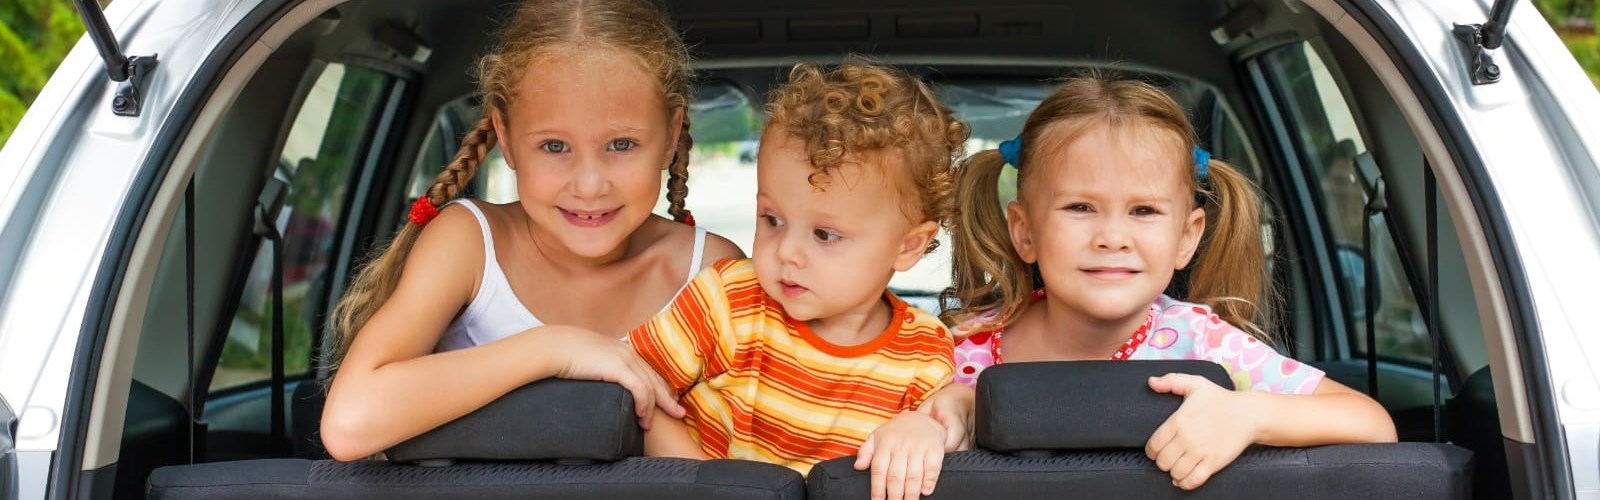 bilferie med børn